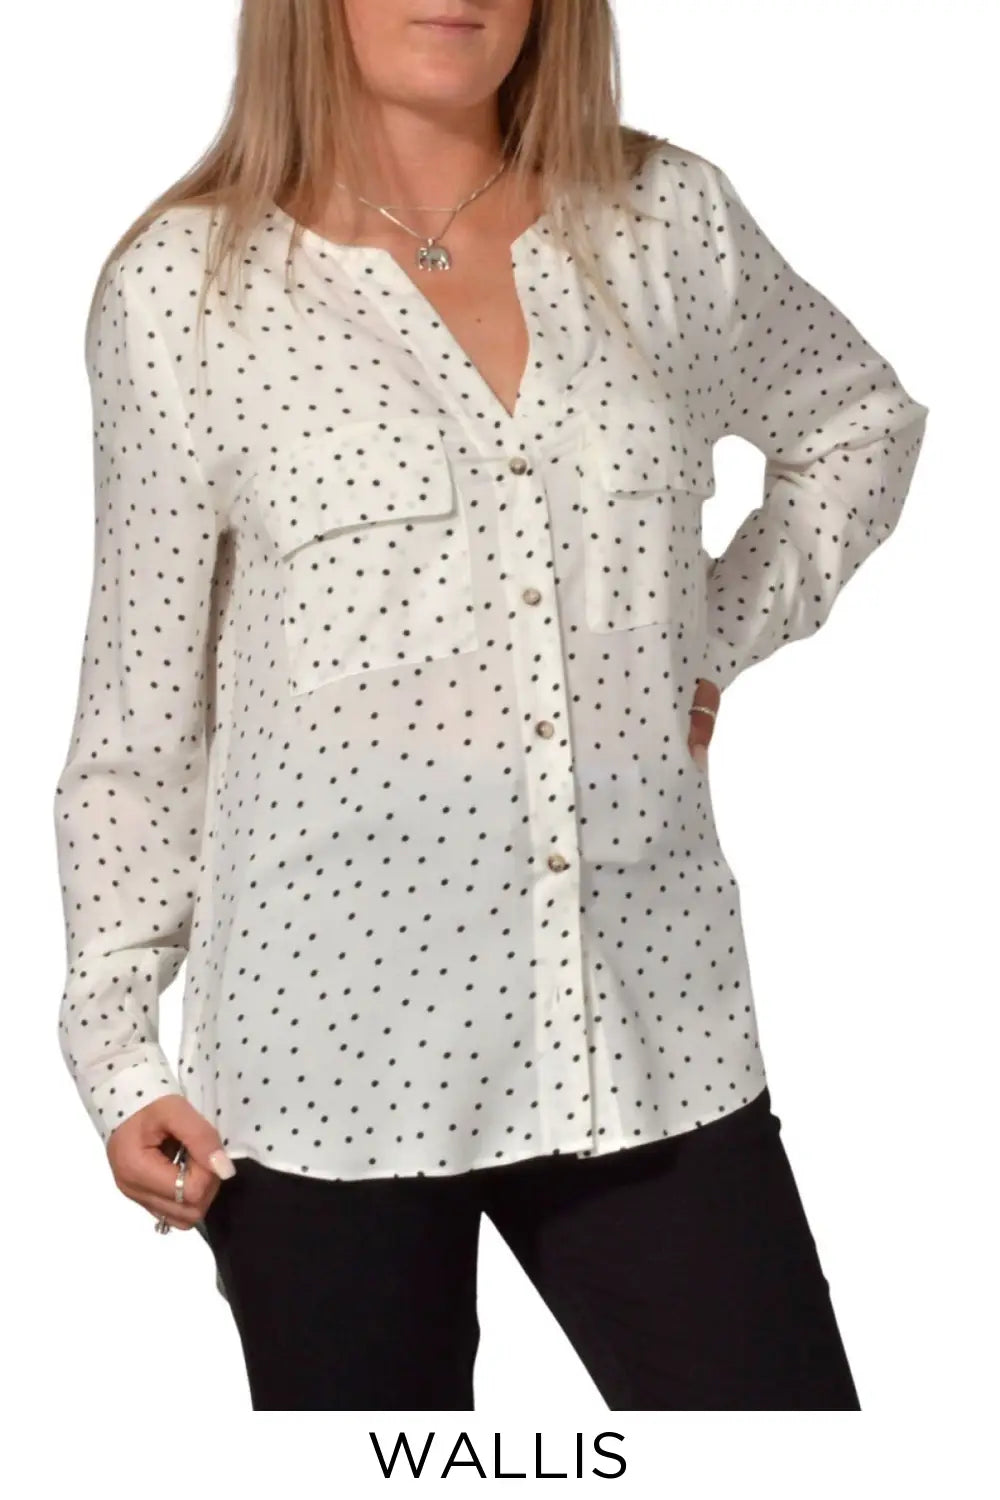 Wallis Silky Patterned Pocket Shirt